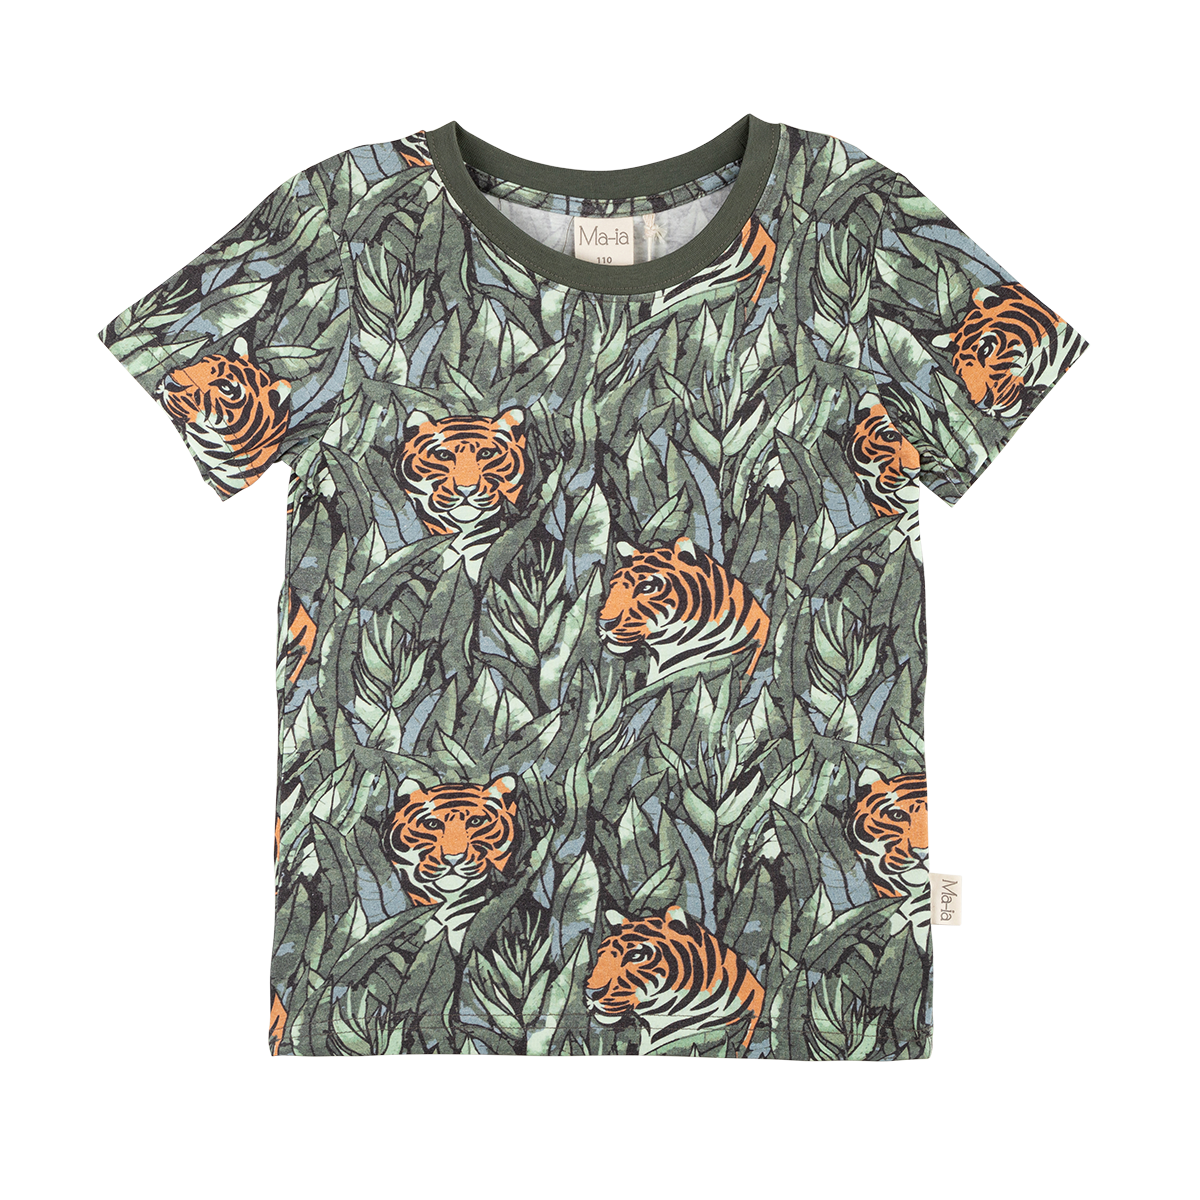 Tiger T-shirt, green